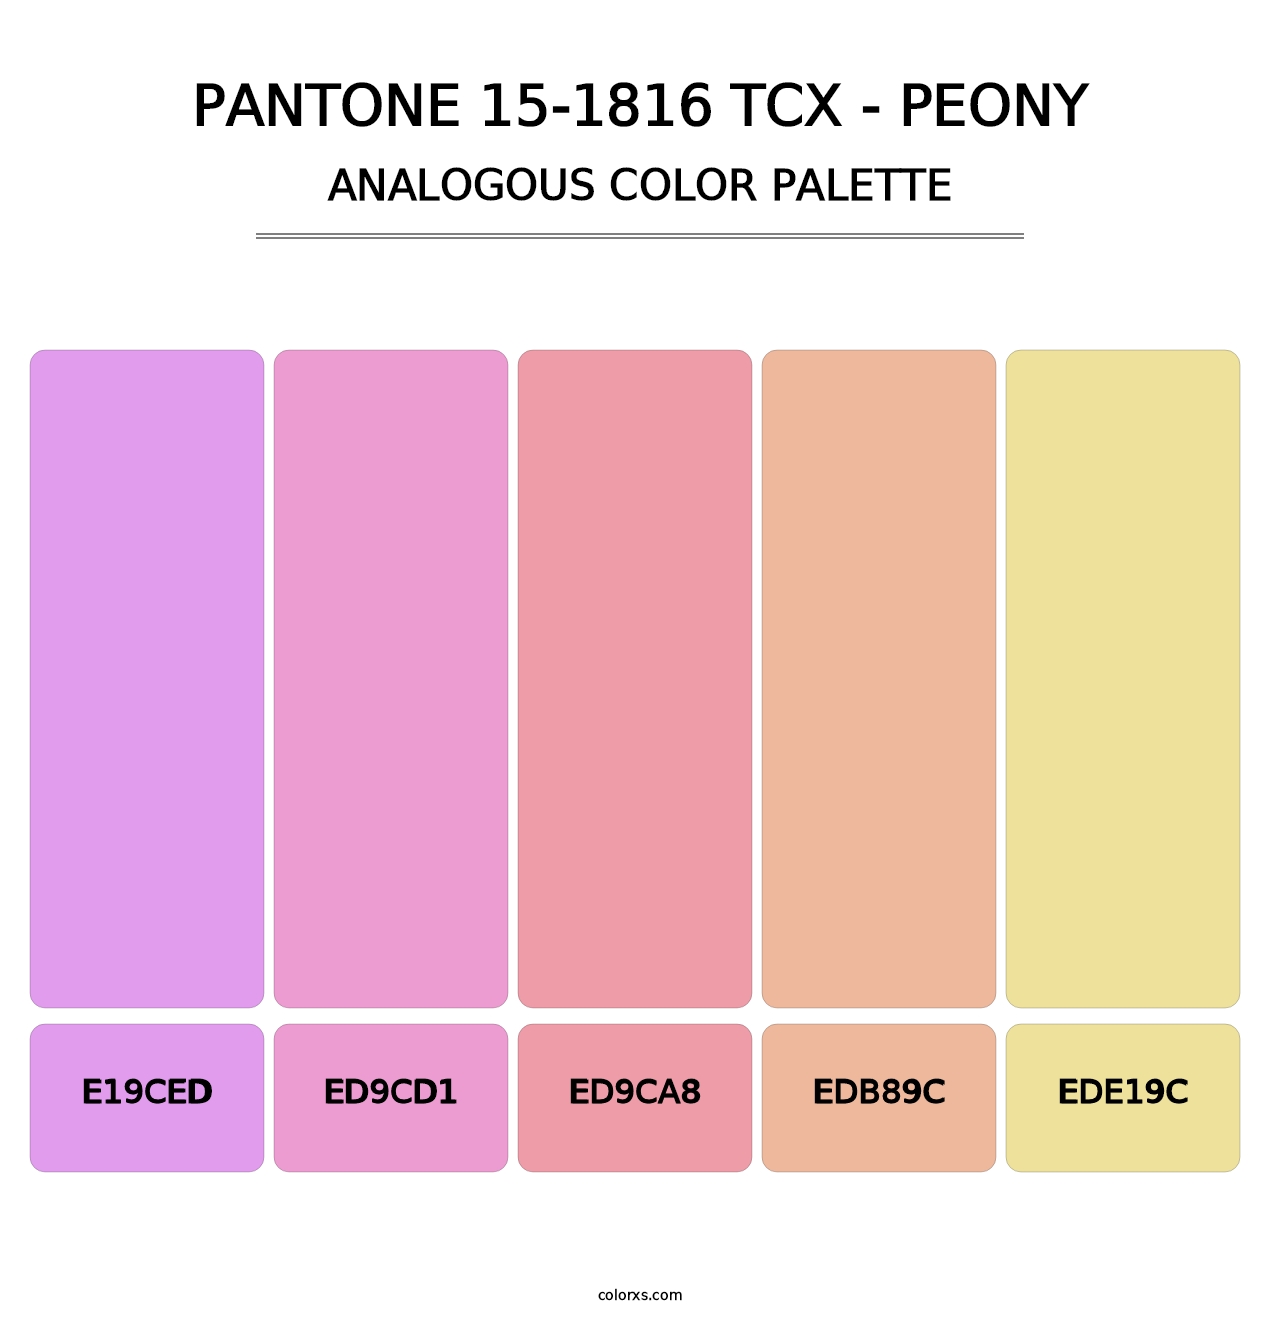 PANTONE 15-1816 TCX - Peony - Analogous Color Palette